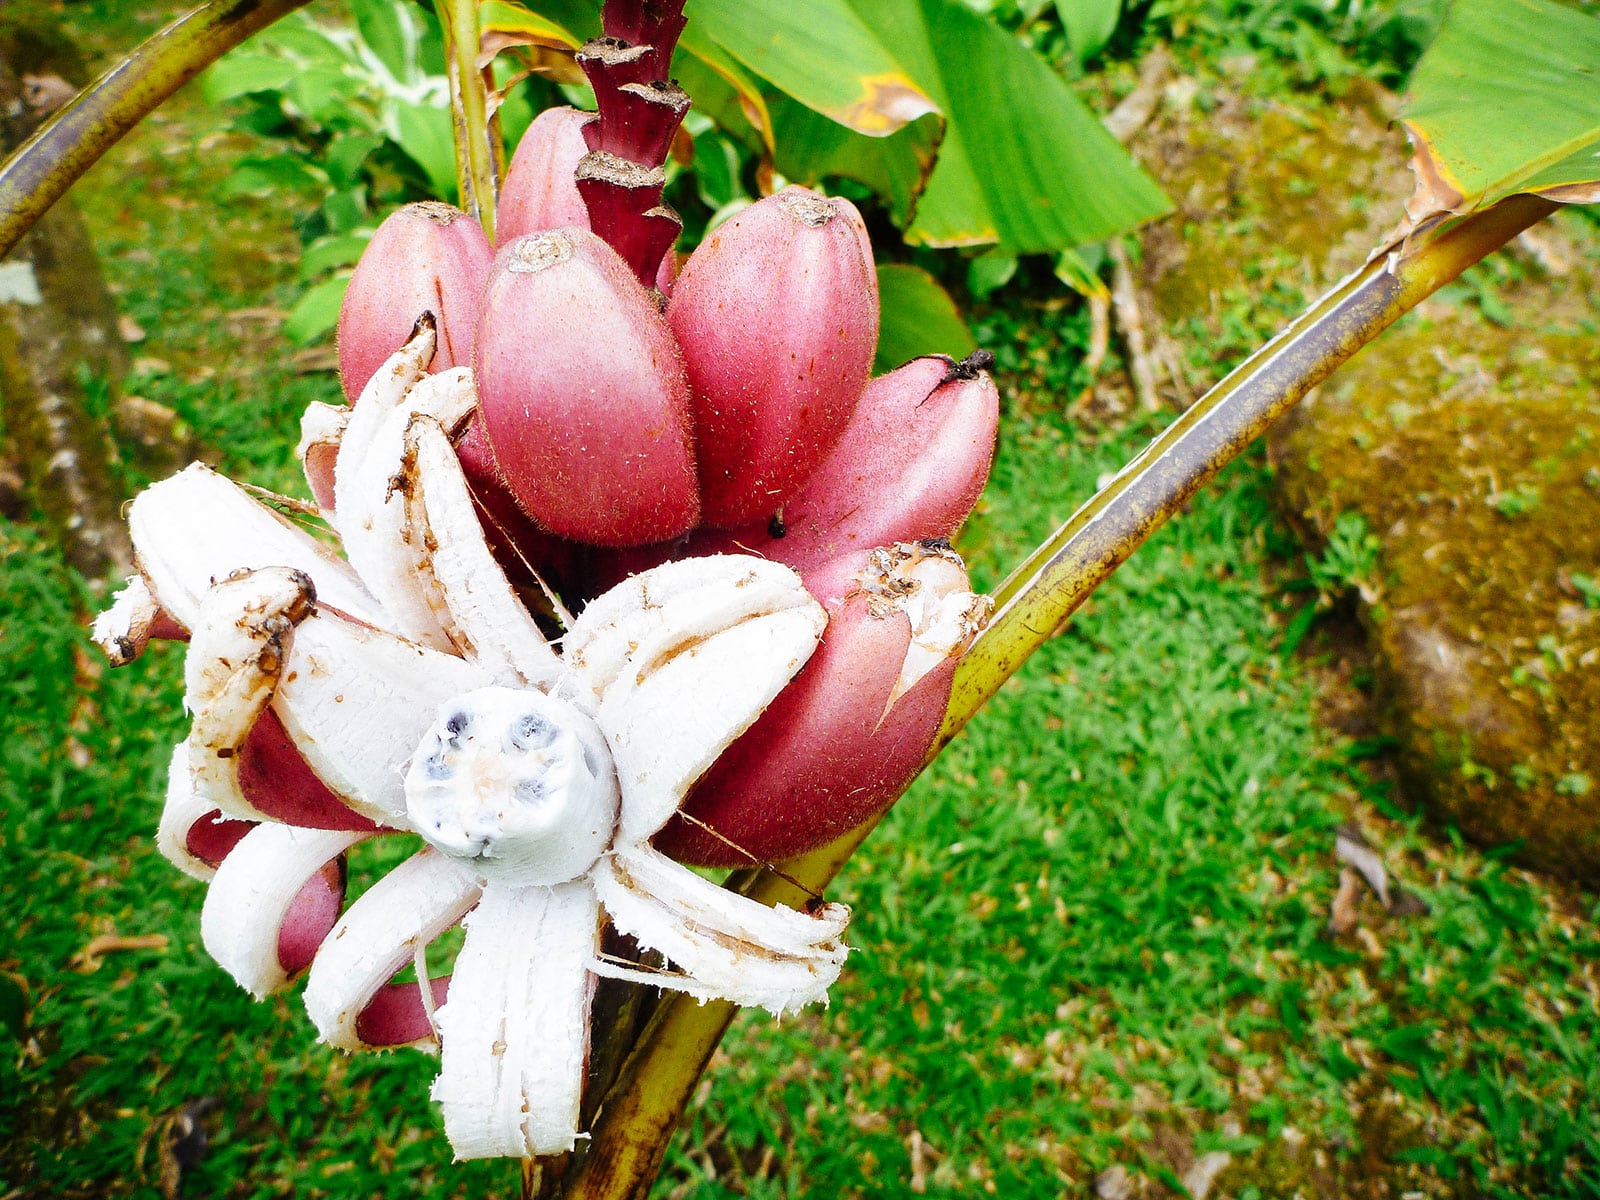 Pink Musa velutina bananas split open on a plant